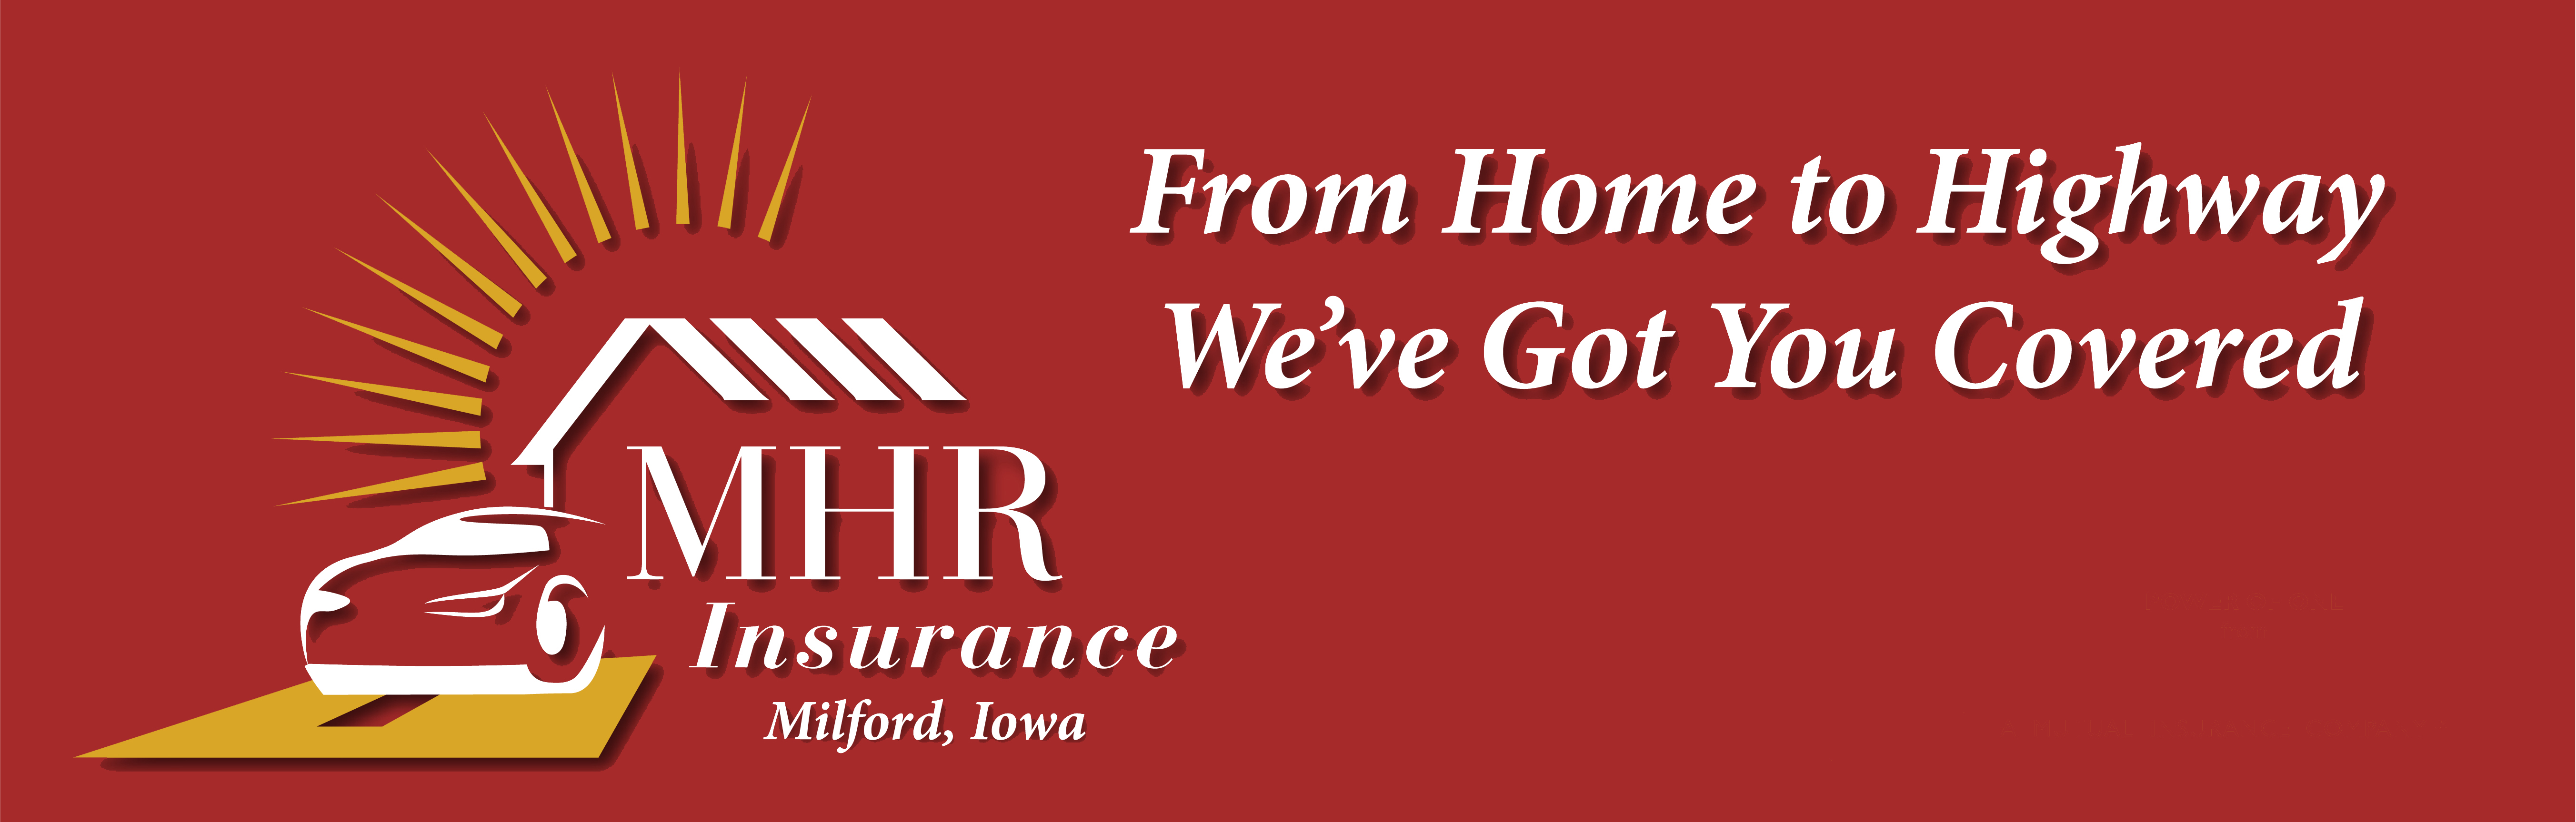 MHR Insurance